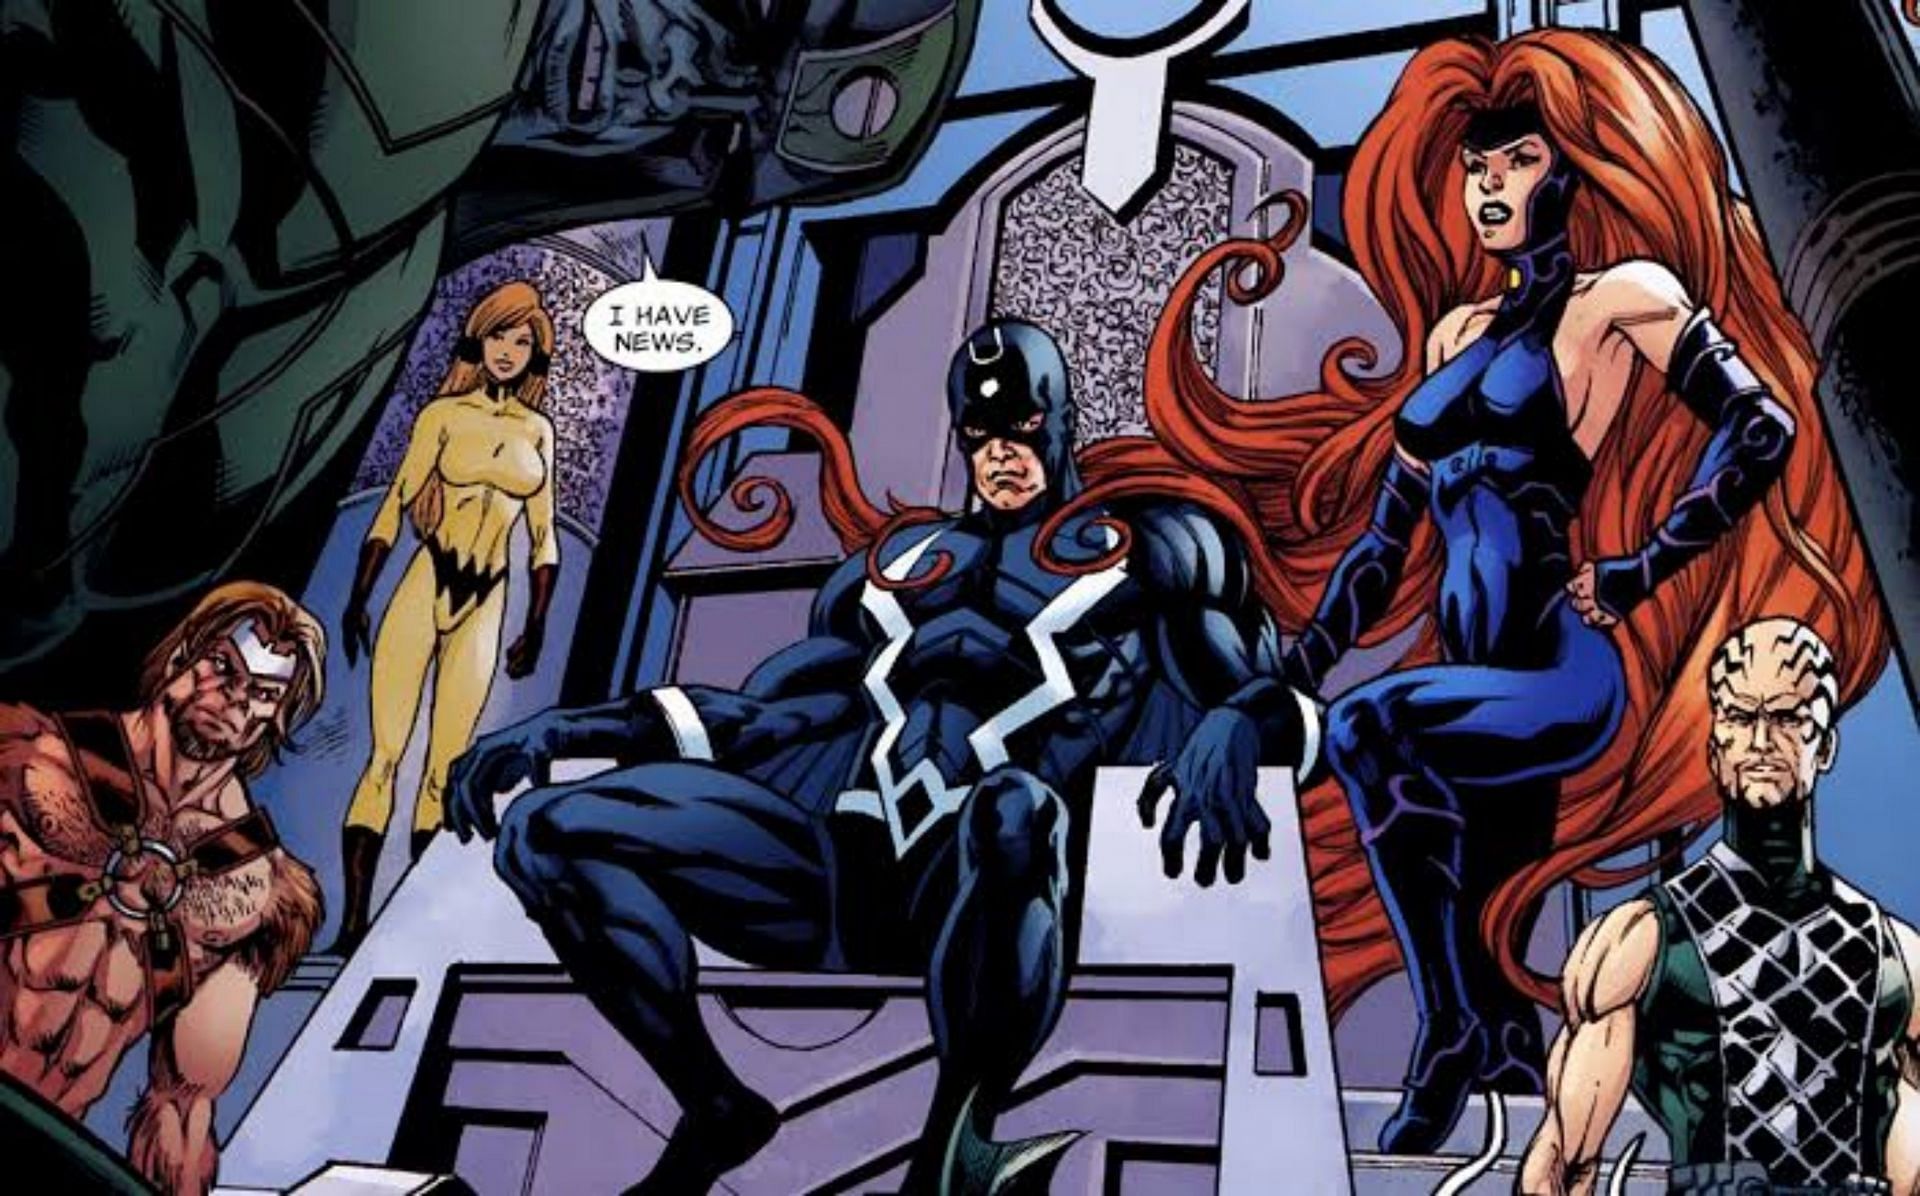 A panel from the Inhumans comics (Image via Marvel Comics)